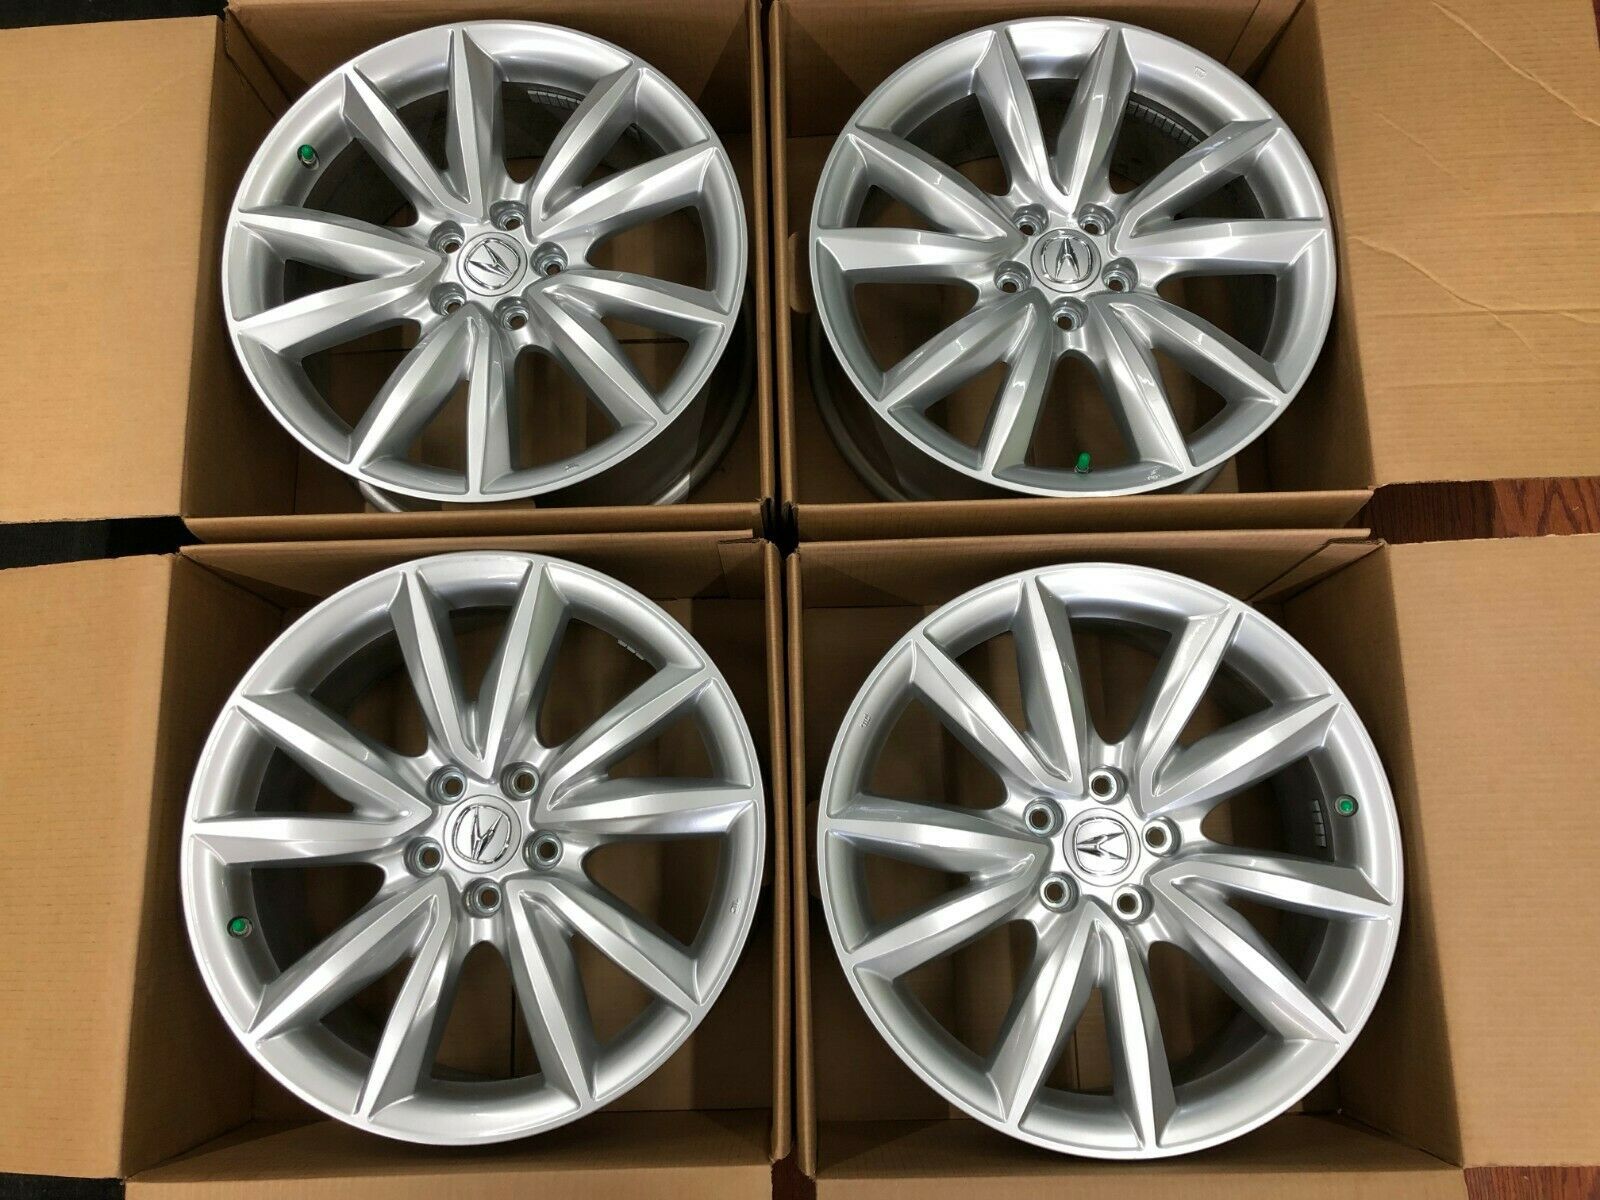 2019 Acura RDX 19" OEM Wheels Glitter Silver Wheels with Sensor